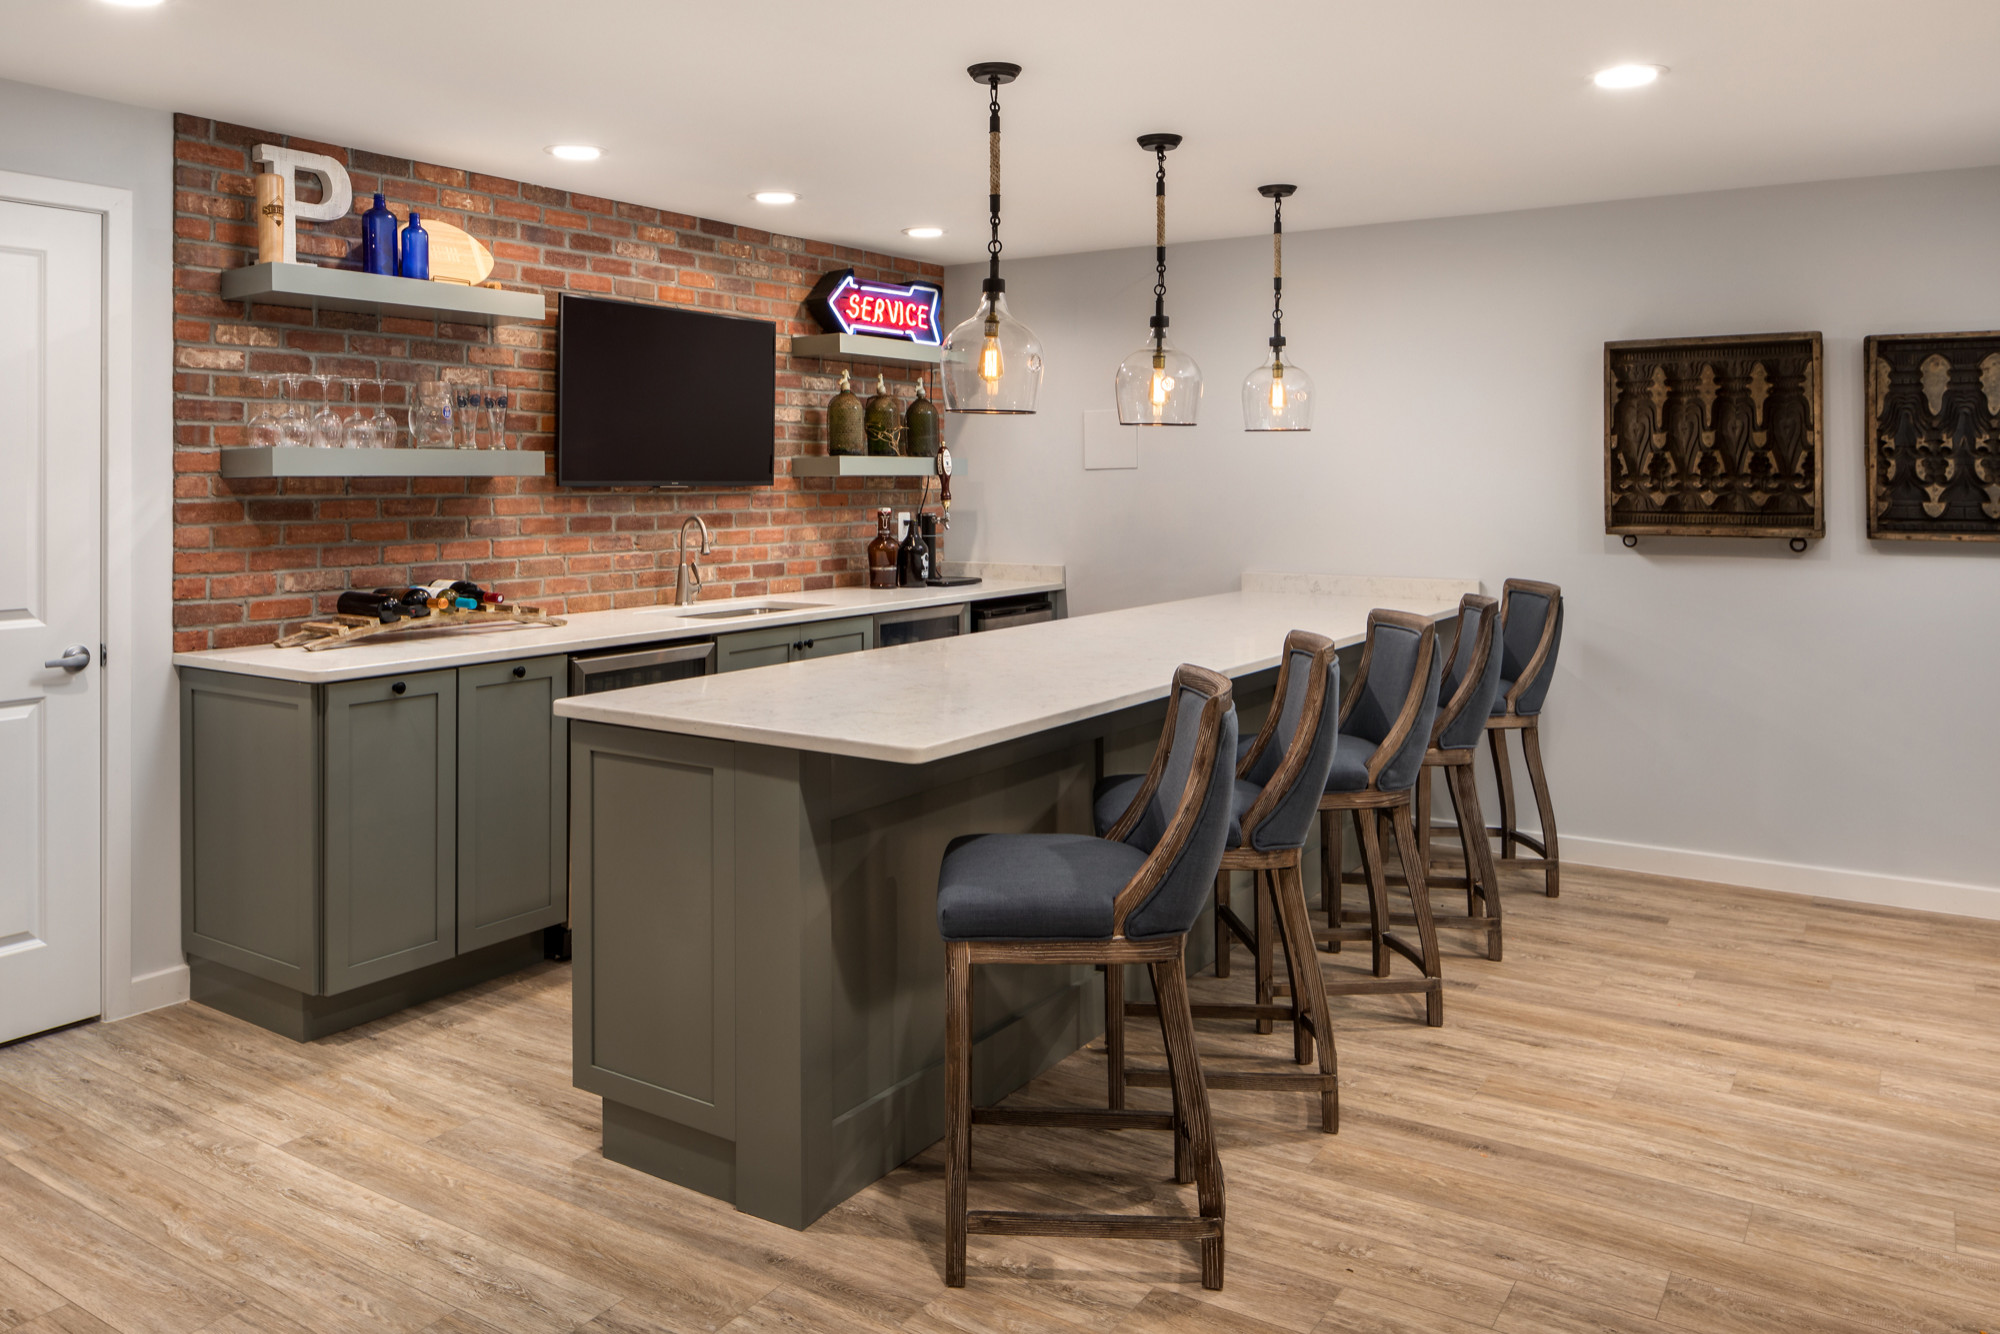 75 Laminate Floor Home Bar Ideas You'll Love - November, 2022 | Houzz